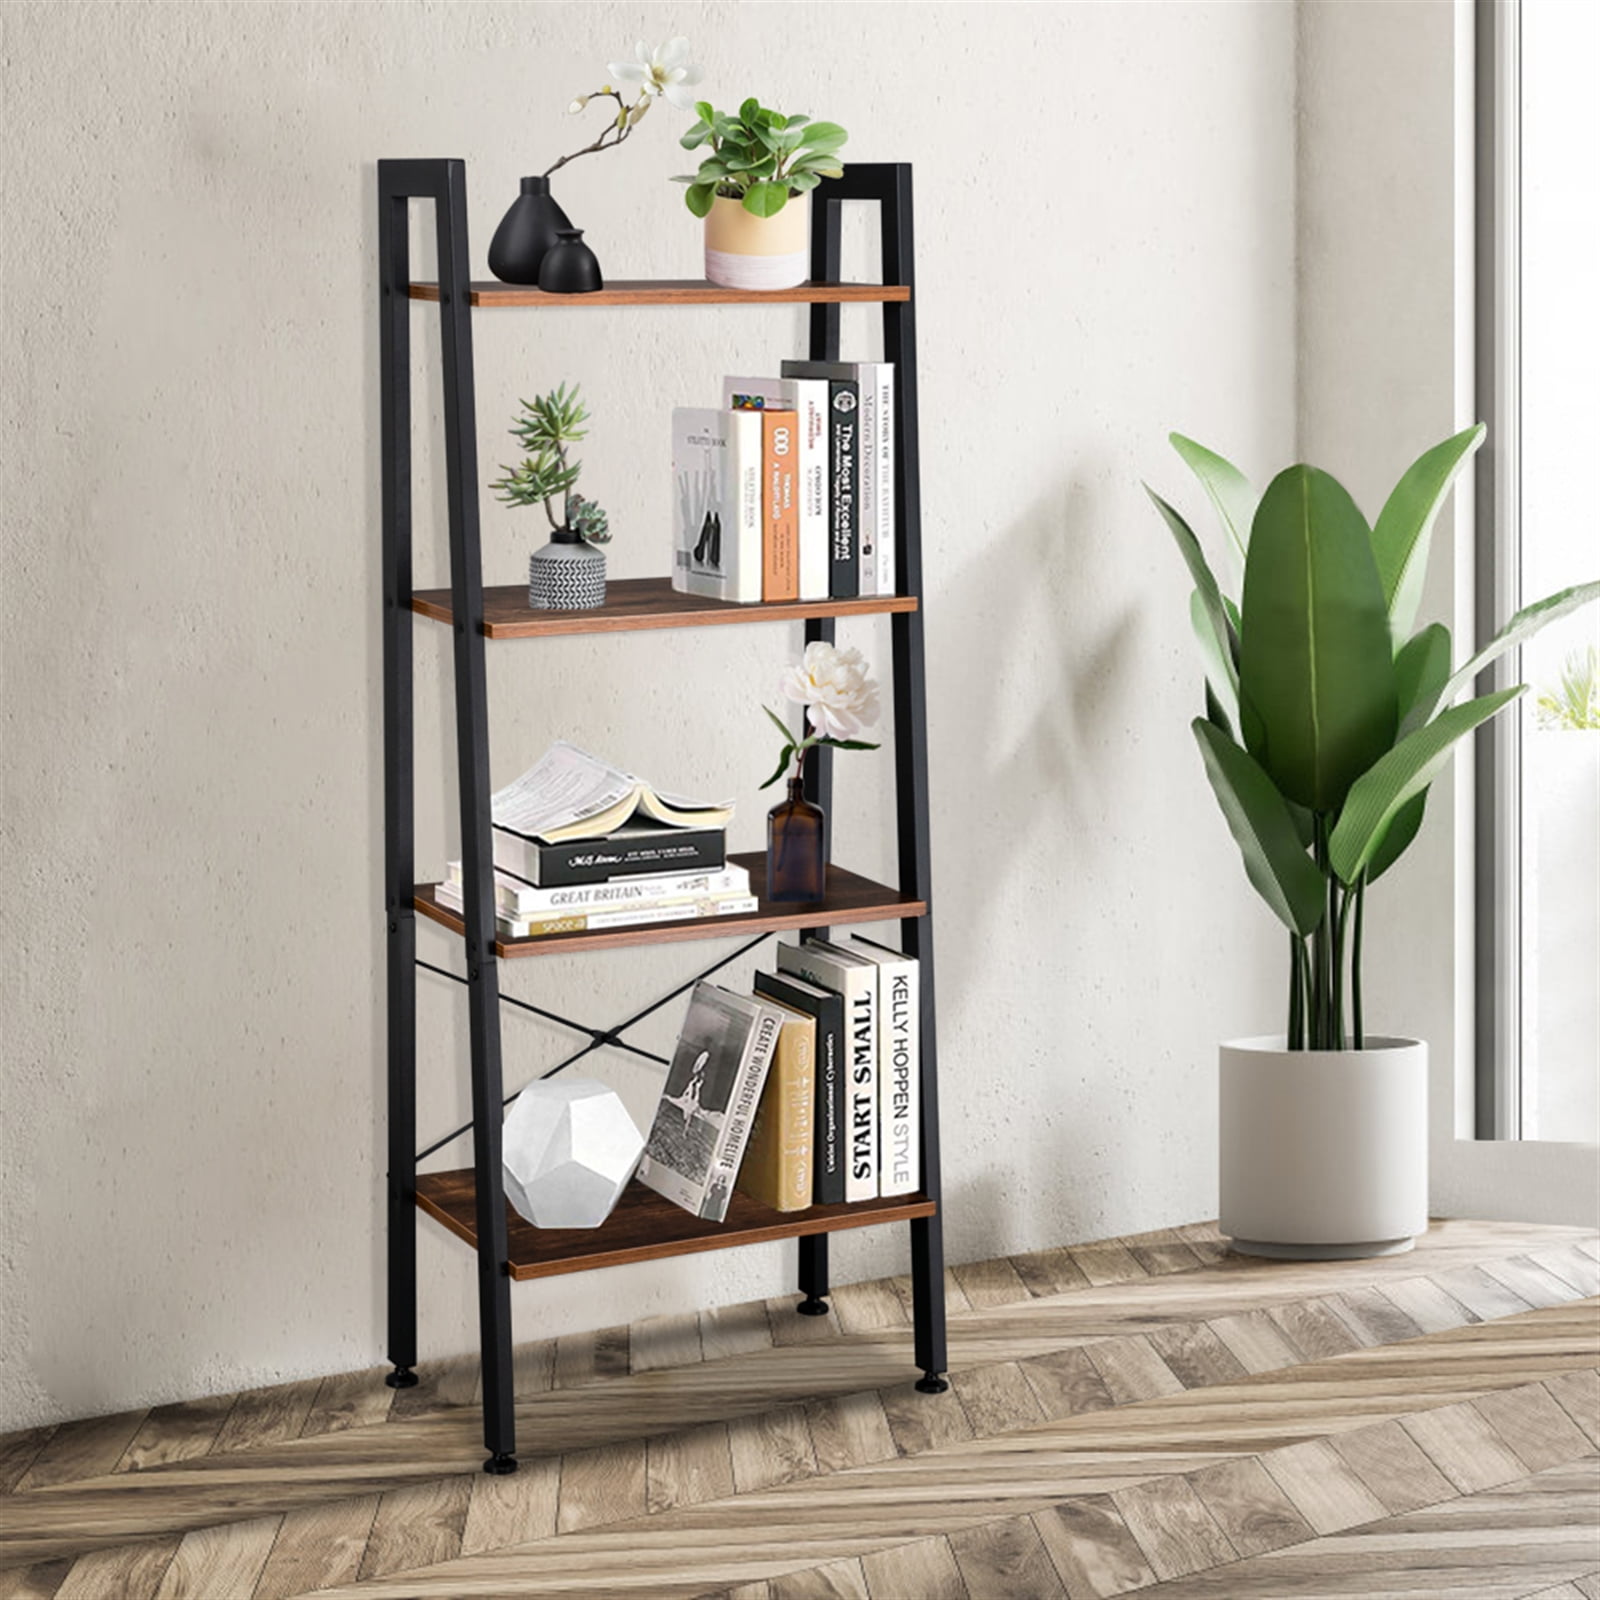 Details about   2 Layer Ladder Bookshelf Shelf Unit Bookcase/Bathroom Display Rack Wall Storage 